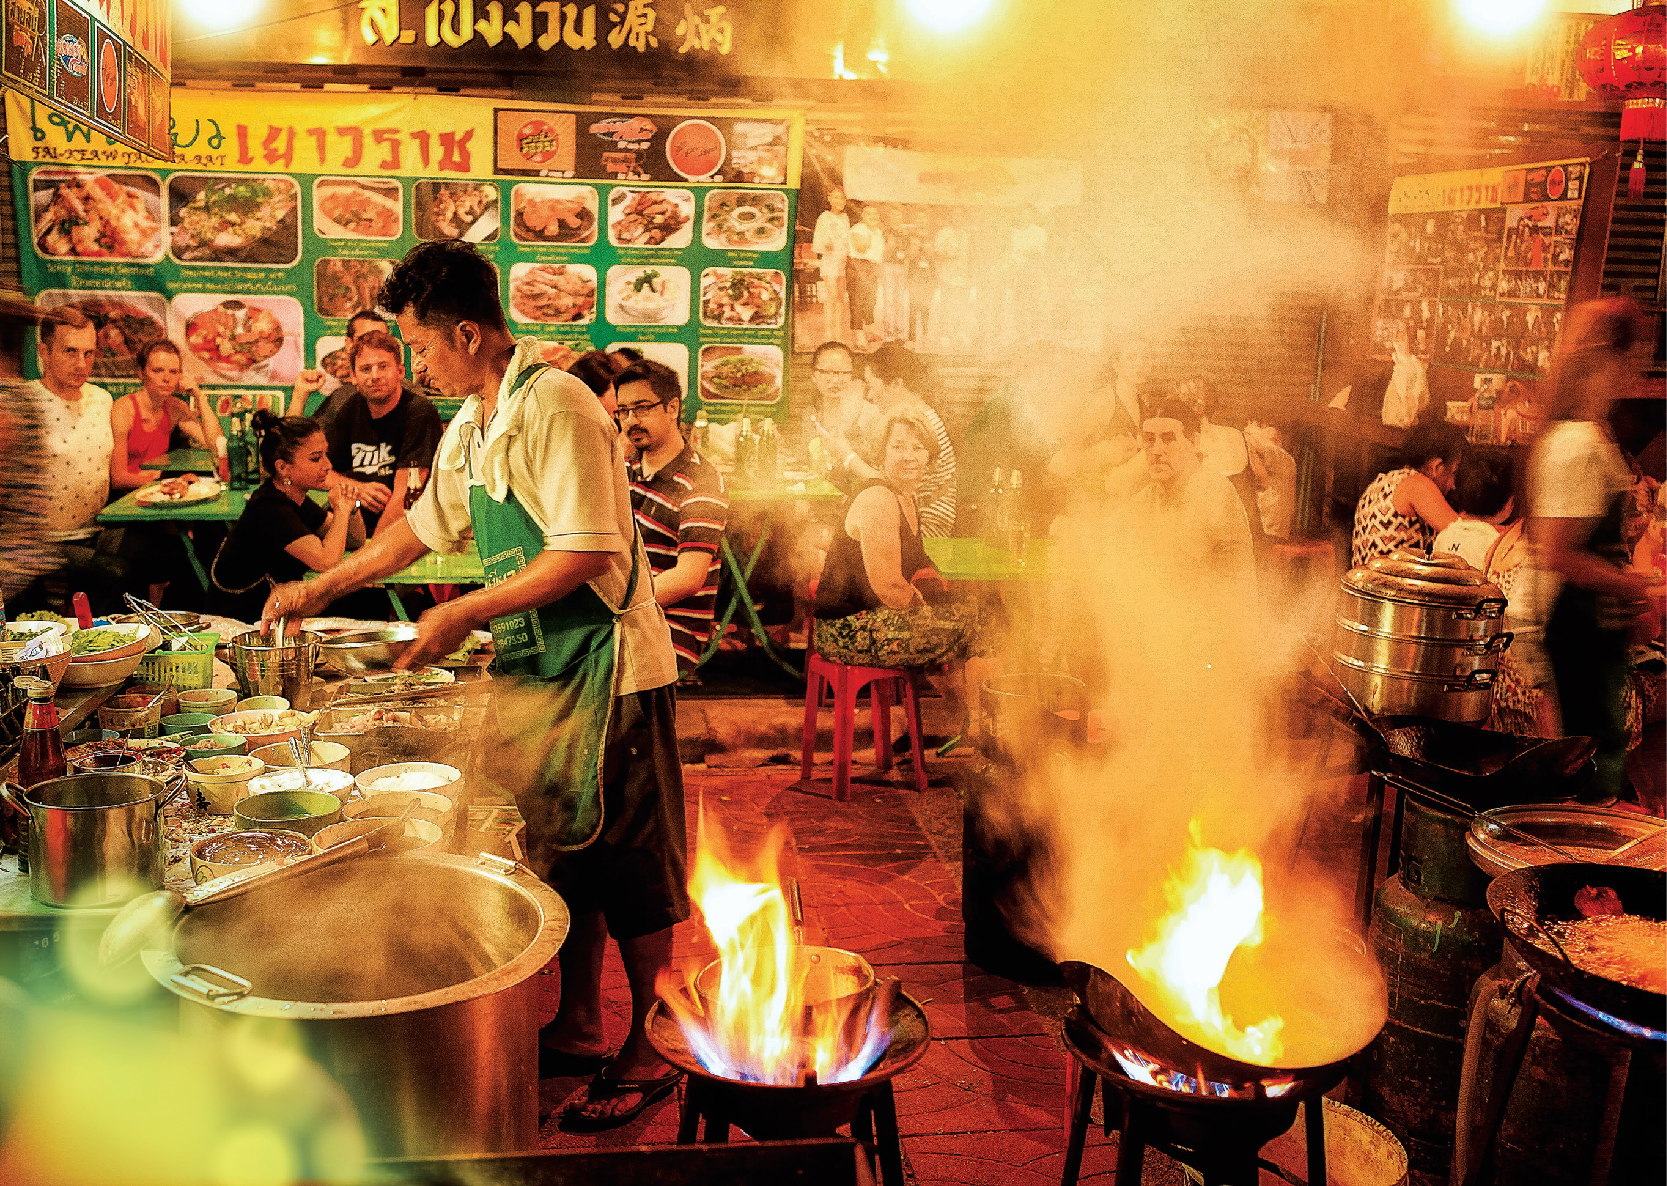 Tailande populiarus gatvės maistas